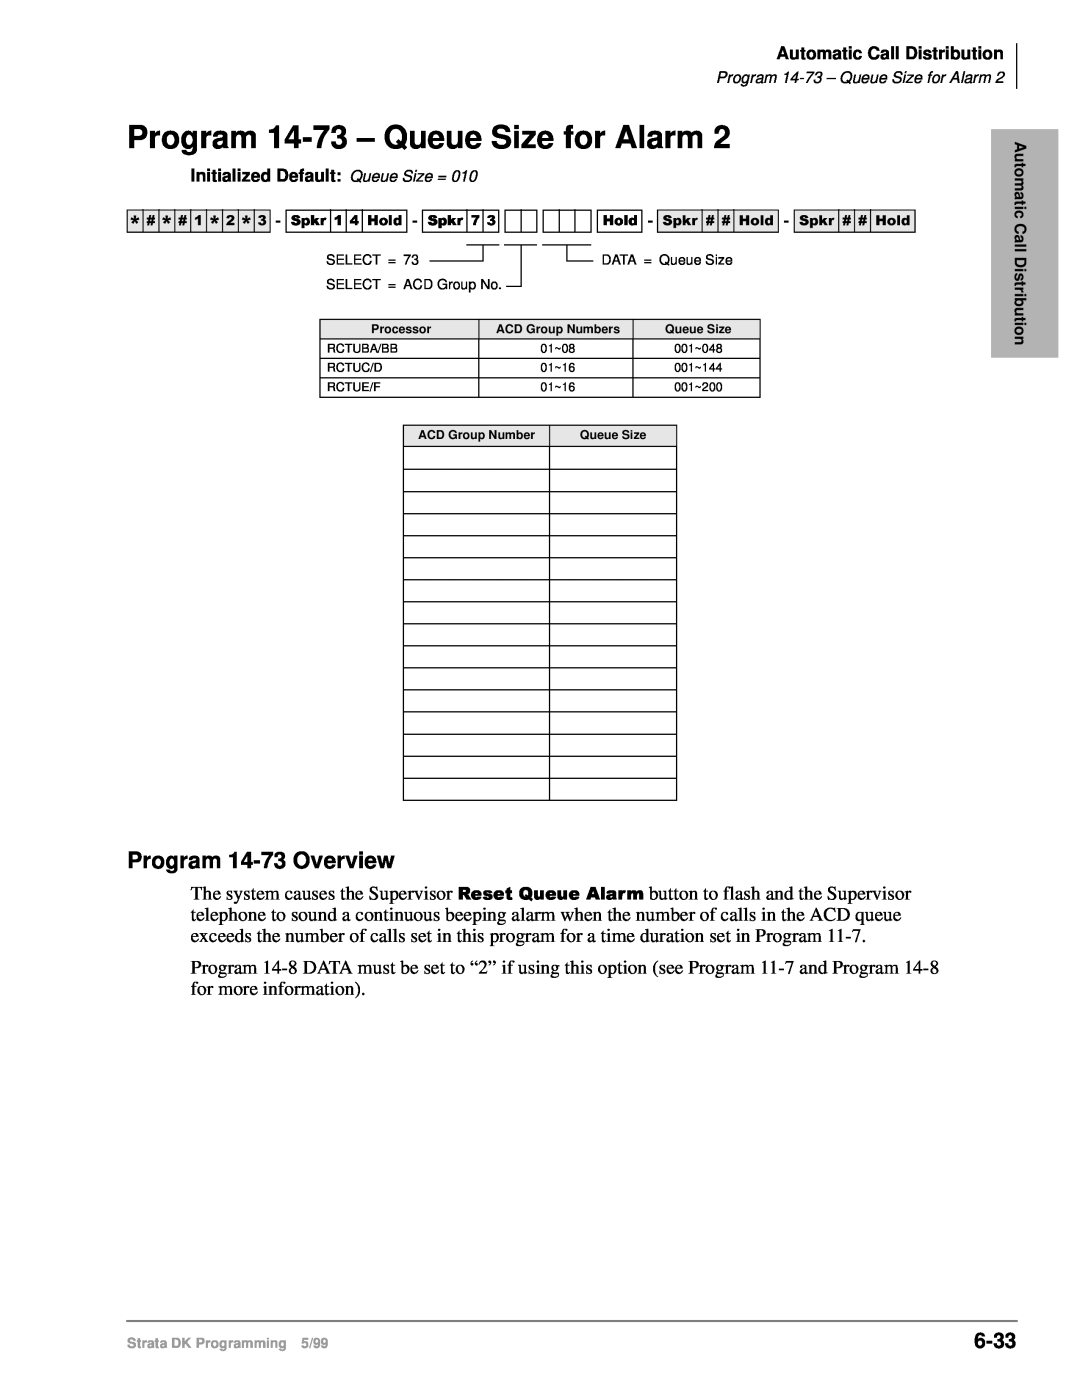 Toshiba dk14 manual Program 14-73– Queue Size for Alarm, Program 14-73Overview, 6-33, 6SNU+ROG6SNU+ROG6SNU+ROG6SNU+ROG 